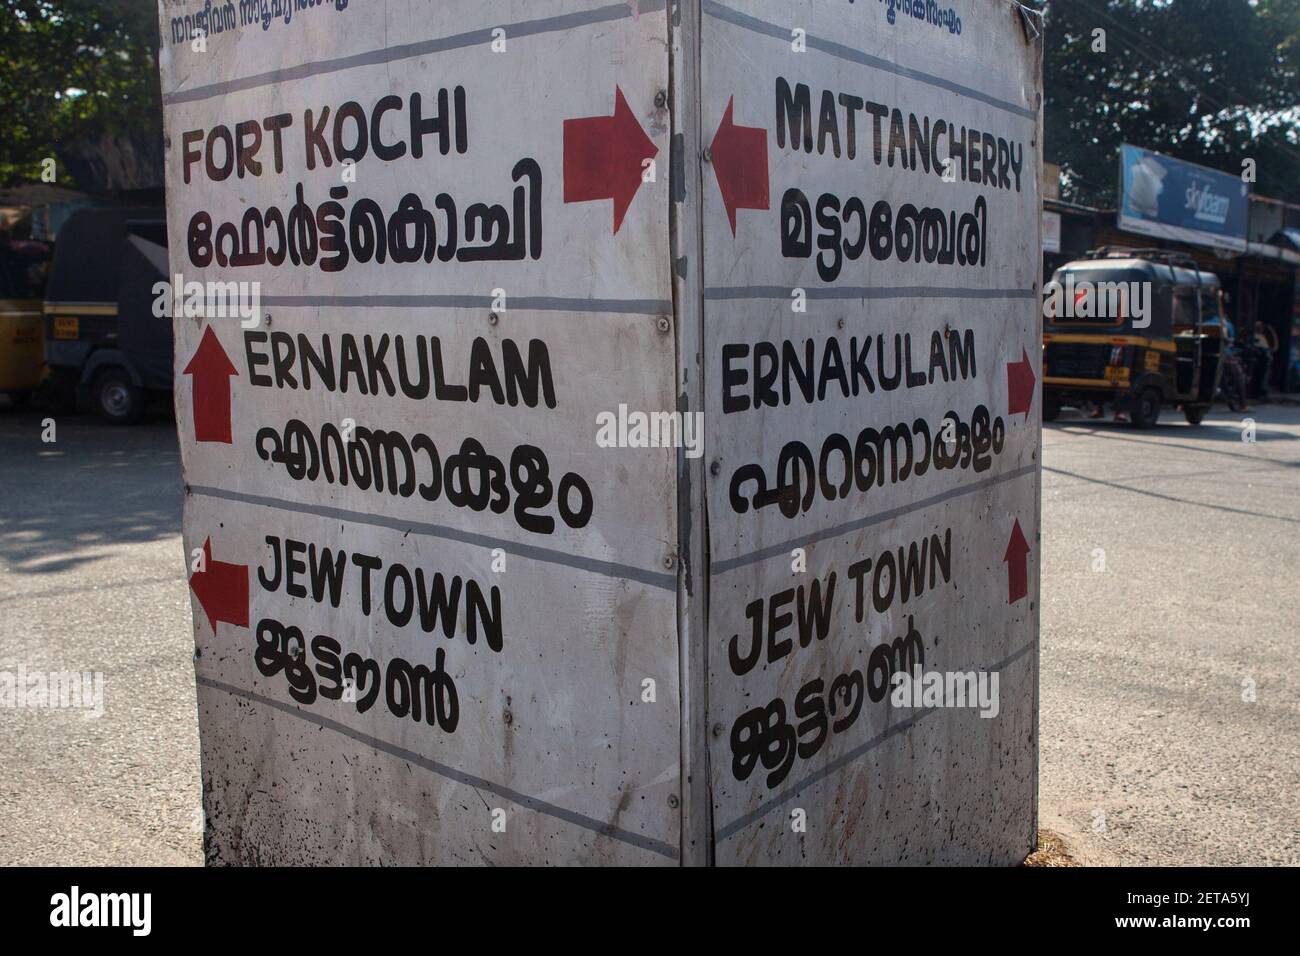 Marcatore stradale per Fort Kochi (Cochin), Jew Town & Ernakulam in Kerala, India (scritto in inglese e malayalam) Foto Stock